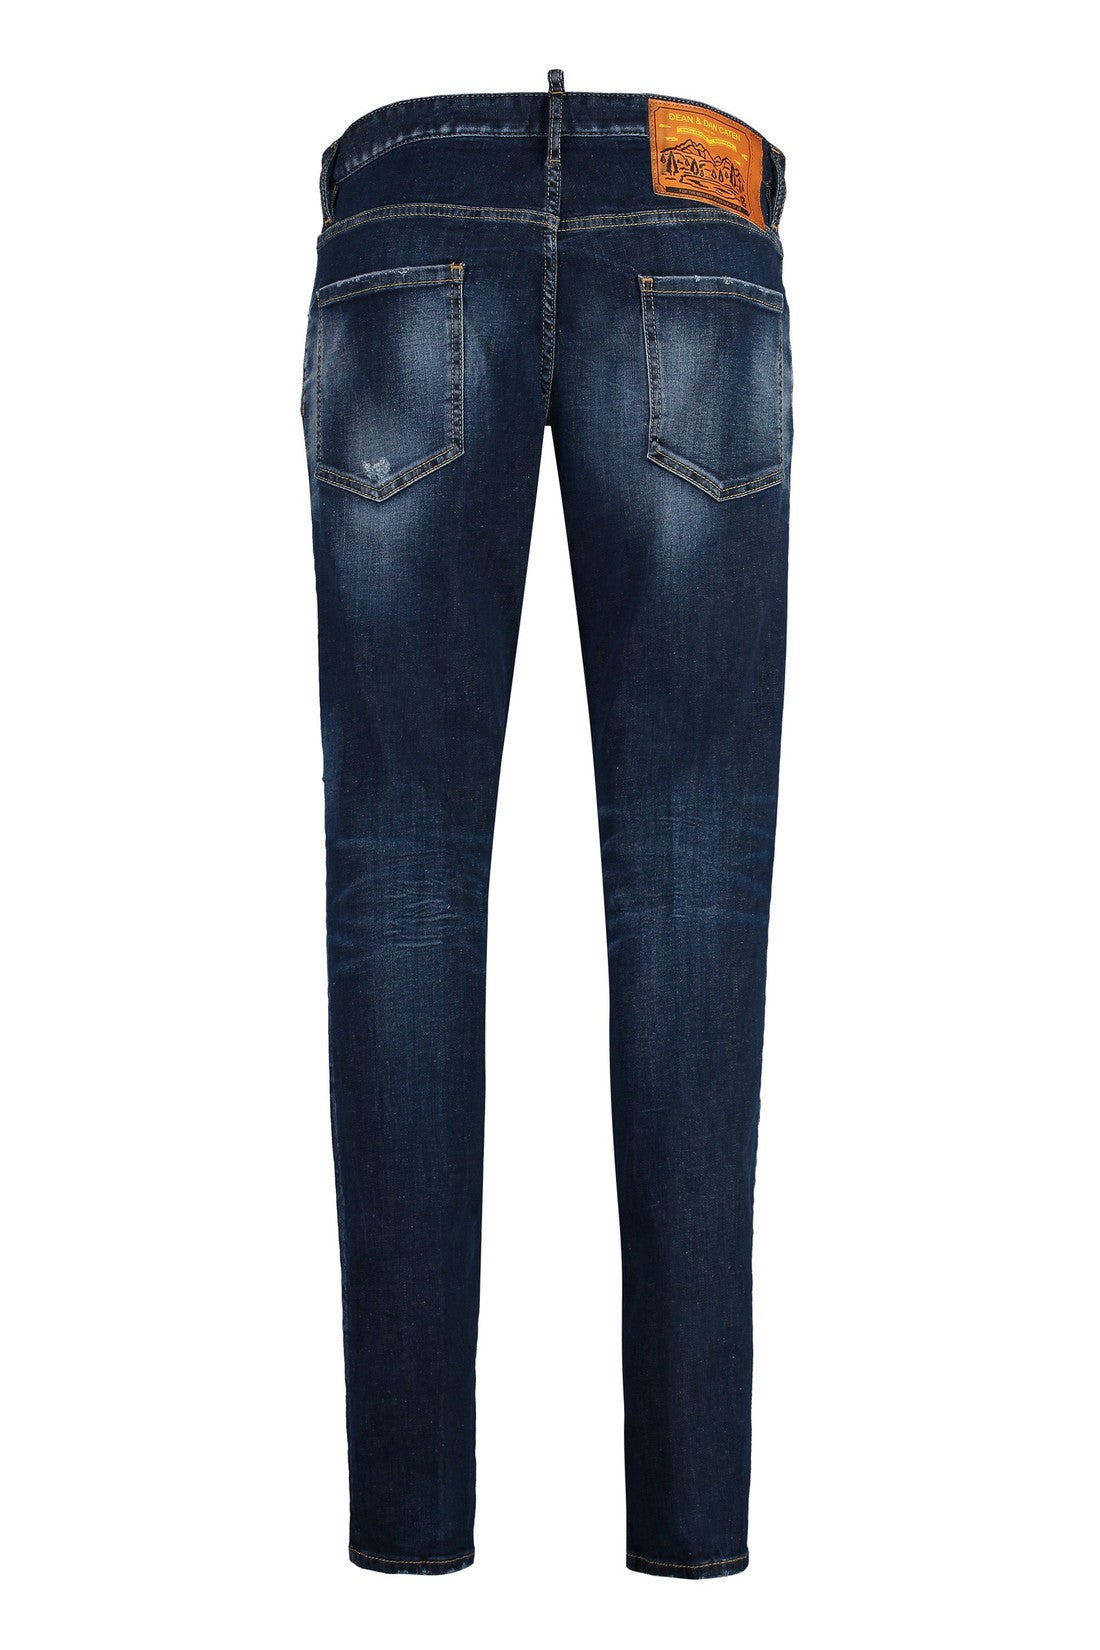 Dsquared2-OUTLET-SALE-Cool-Guy jeans-ARCHIVIST